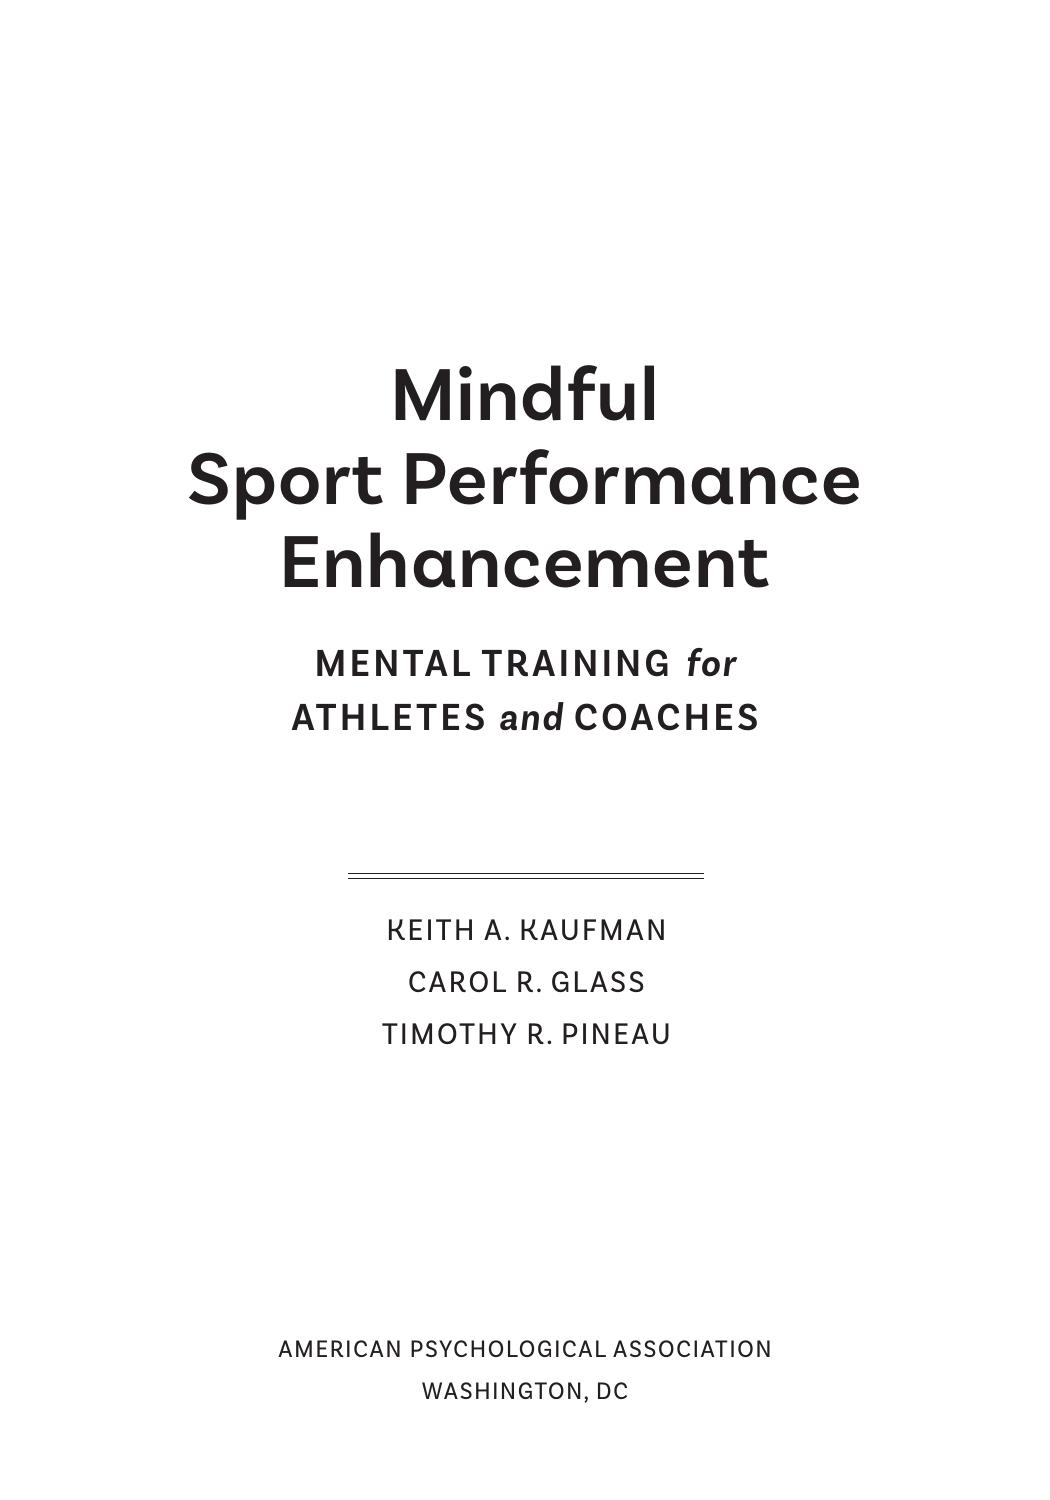 Mindful Sport Performance Enhancement